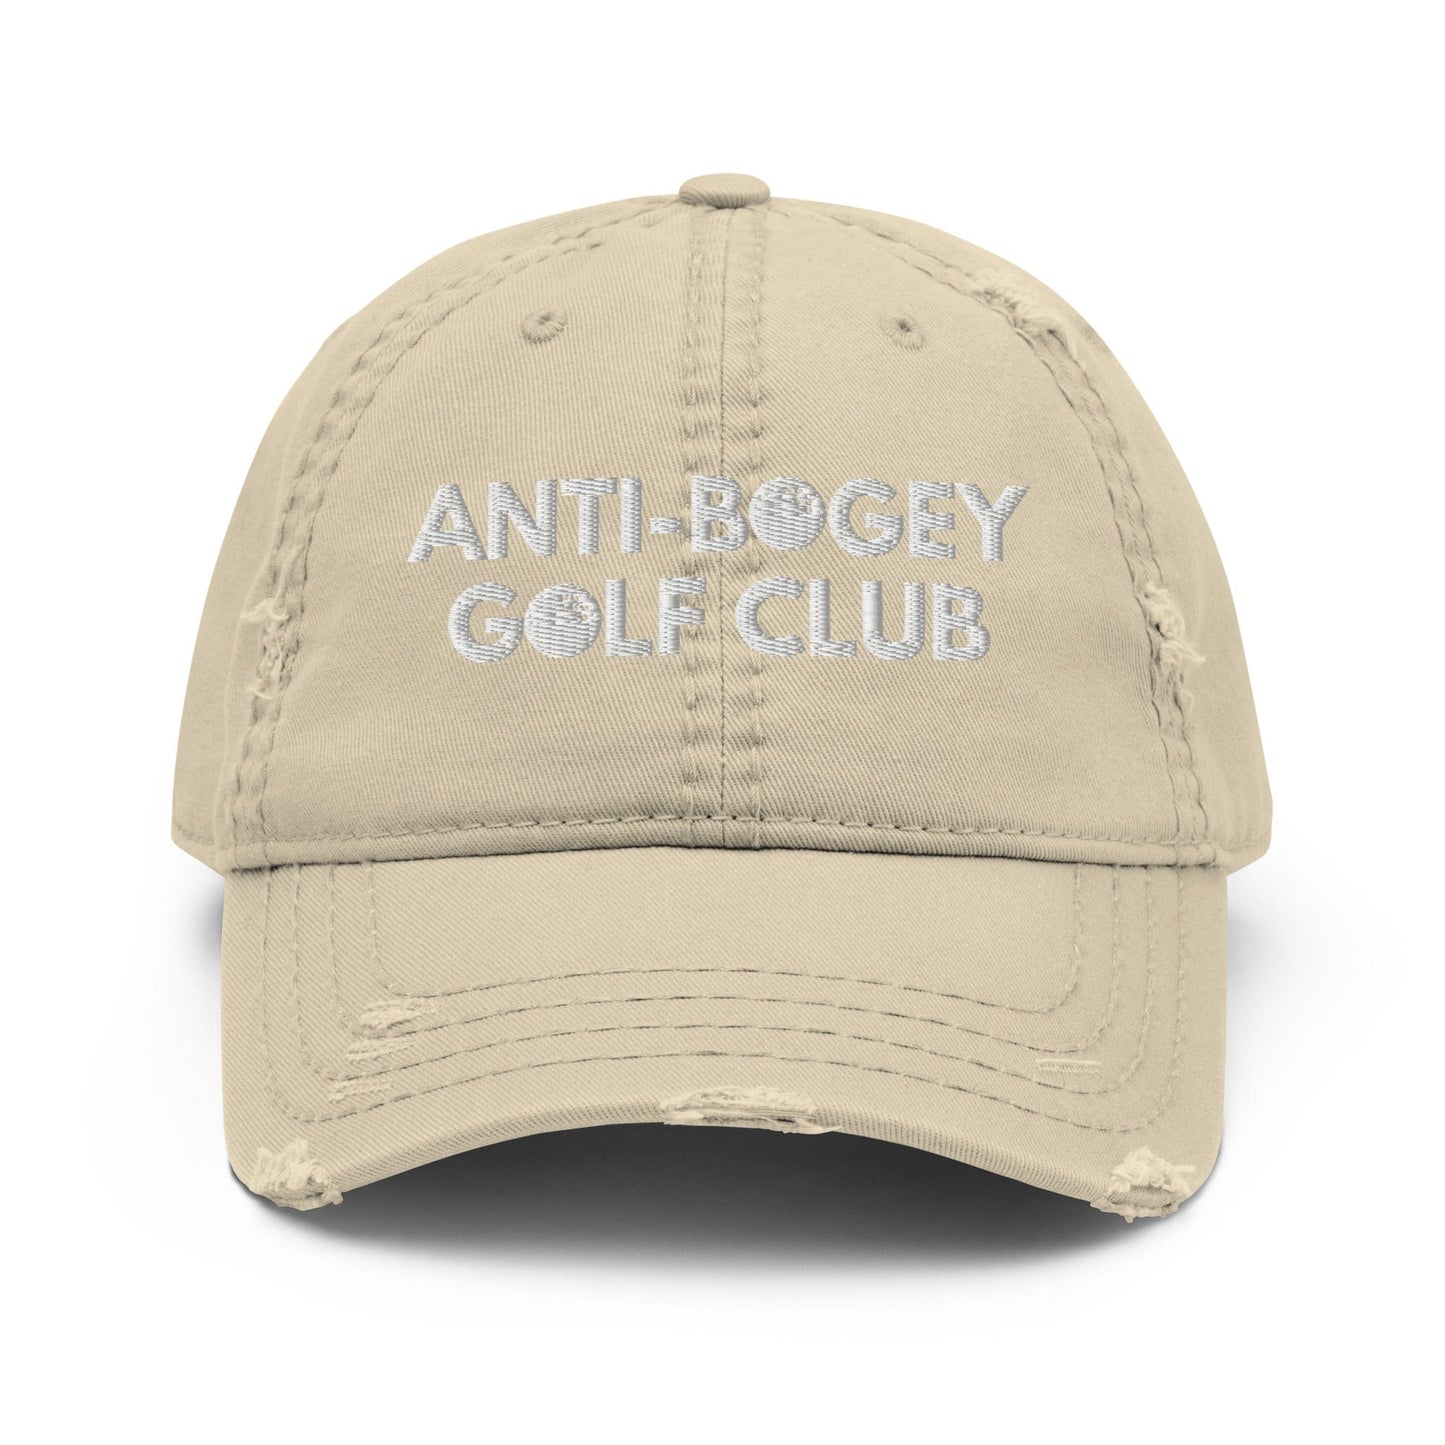 Funny Golfer Gifts  Distressed Cap Khaki Anti-Bogey Golf Club Hat Distressed Hat